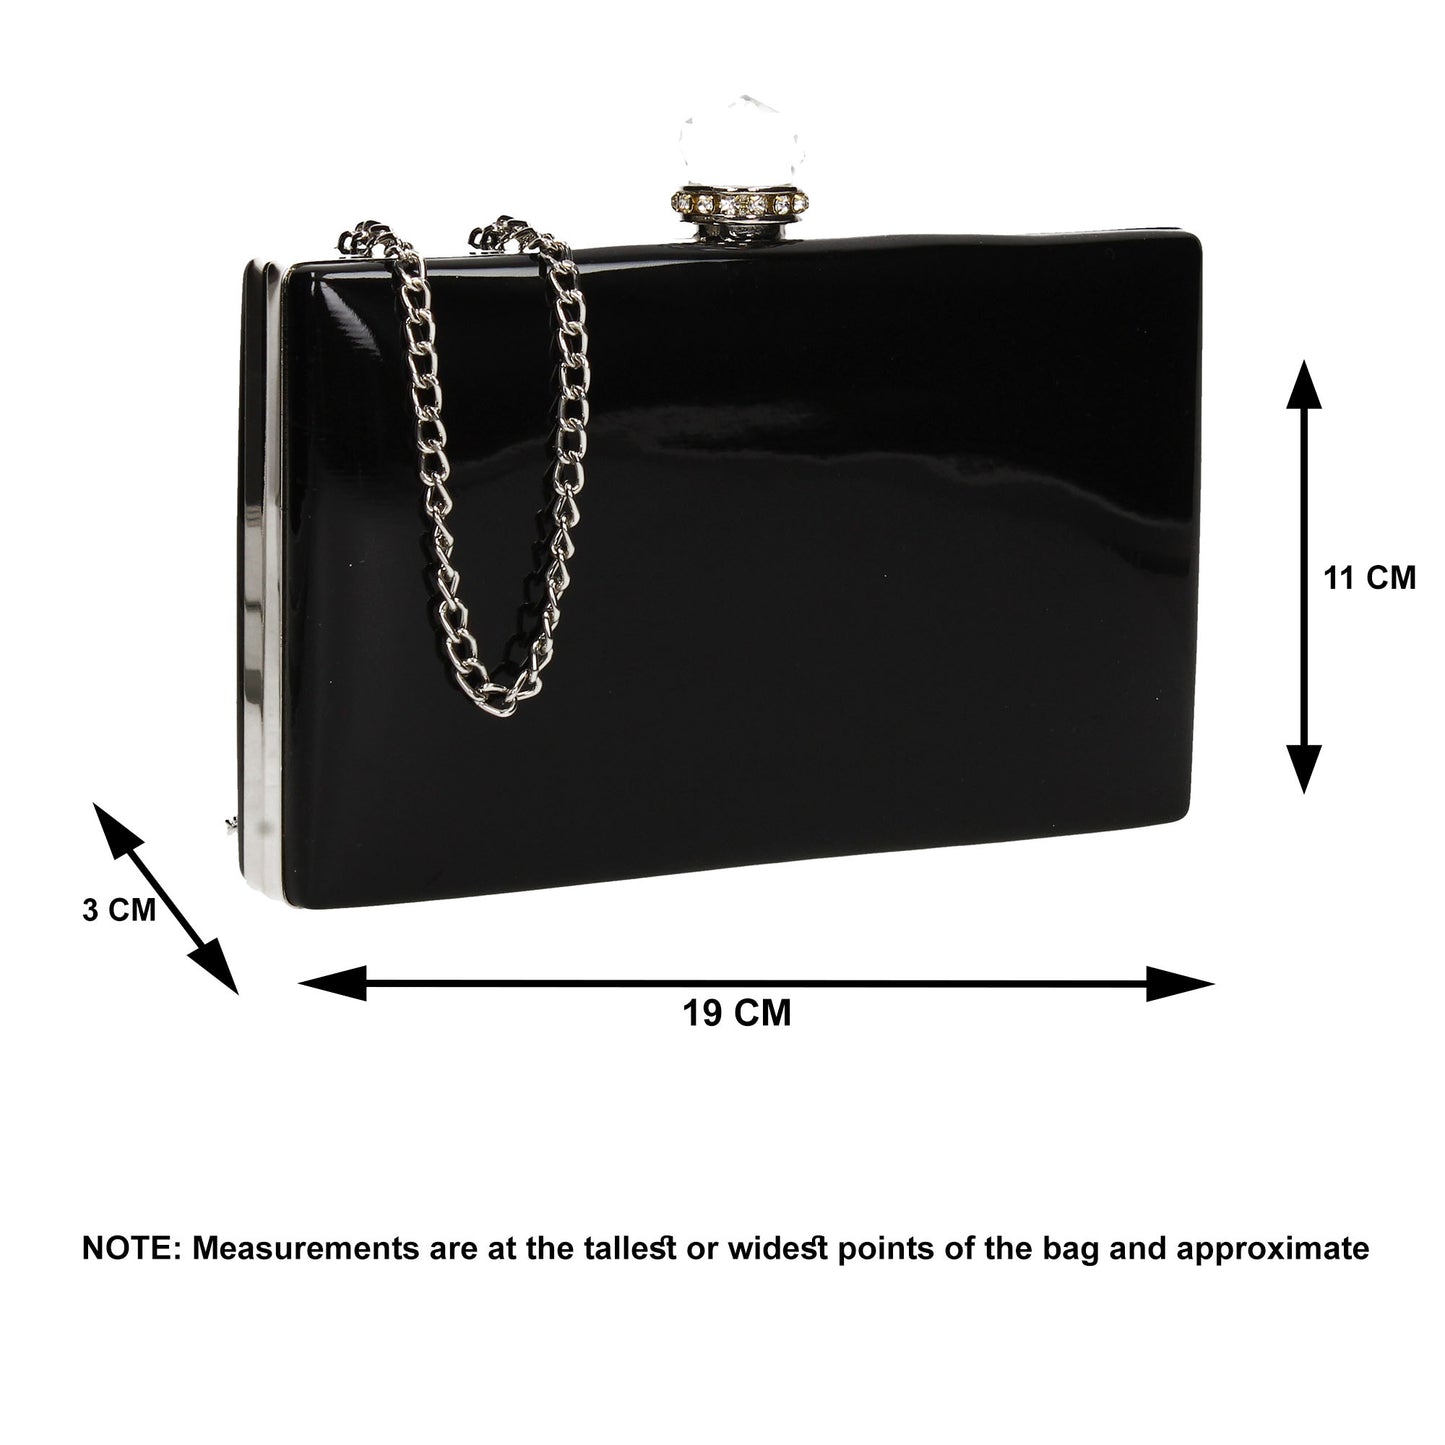 SWANKYSWANS Emilia Patent Clutch Bag Black Cute Cheap Clutch Bag For Weddings School and Work